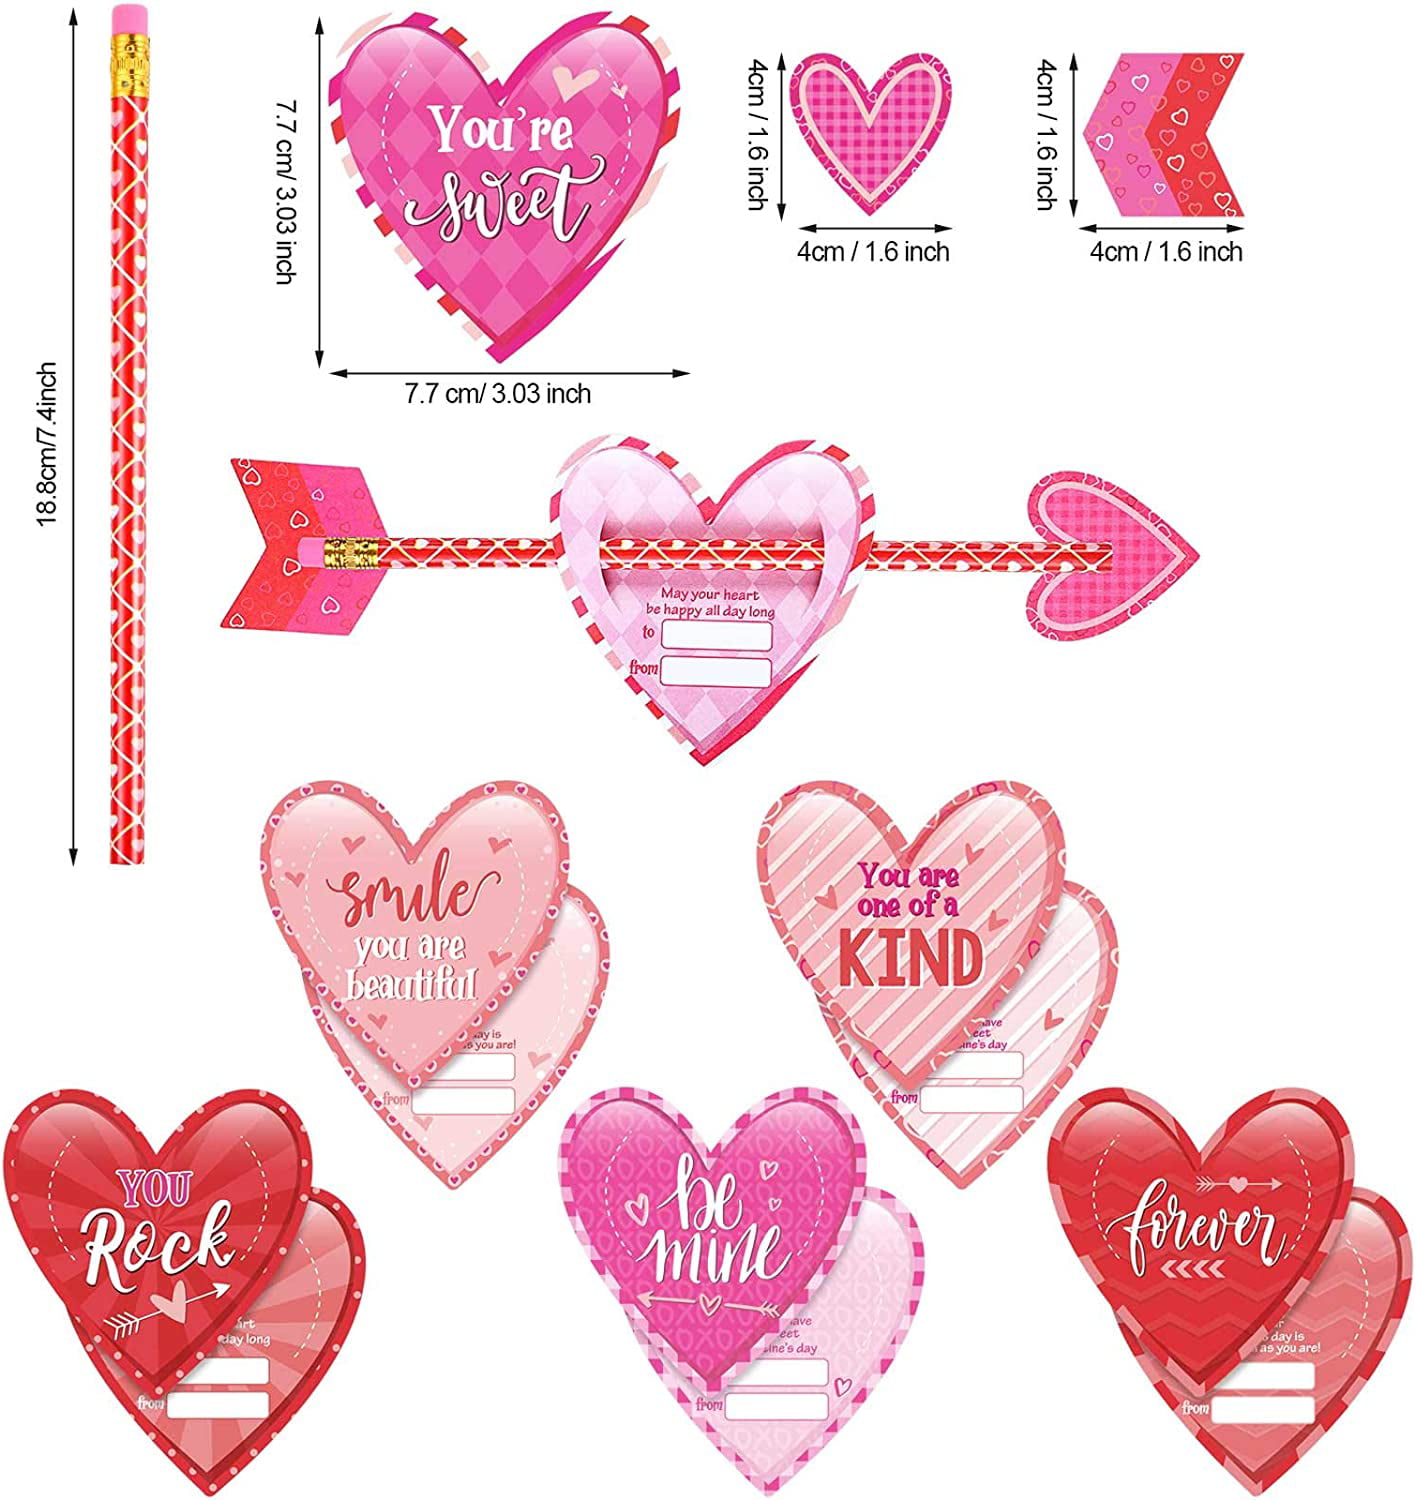 WONDER WOMAN Valentines Day Cards 16  & 16 Pencils #2  8 Designs New 